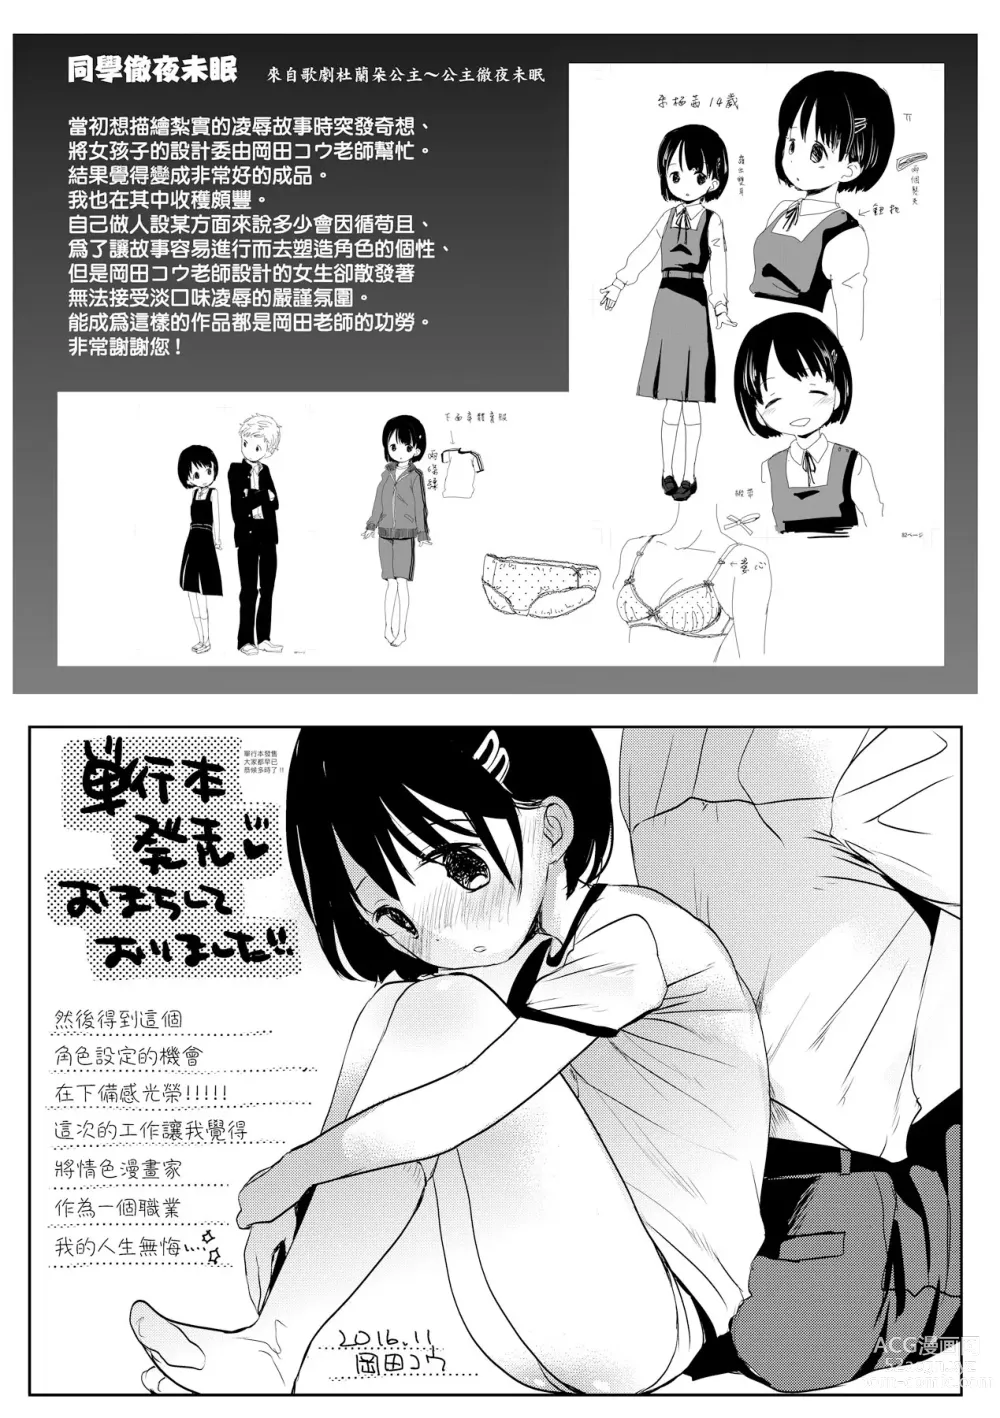 Page 241 of manga Ero Pippi (decensored)